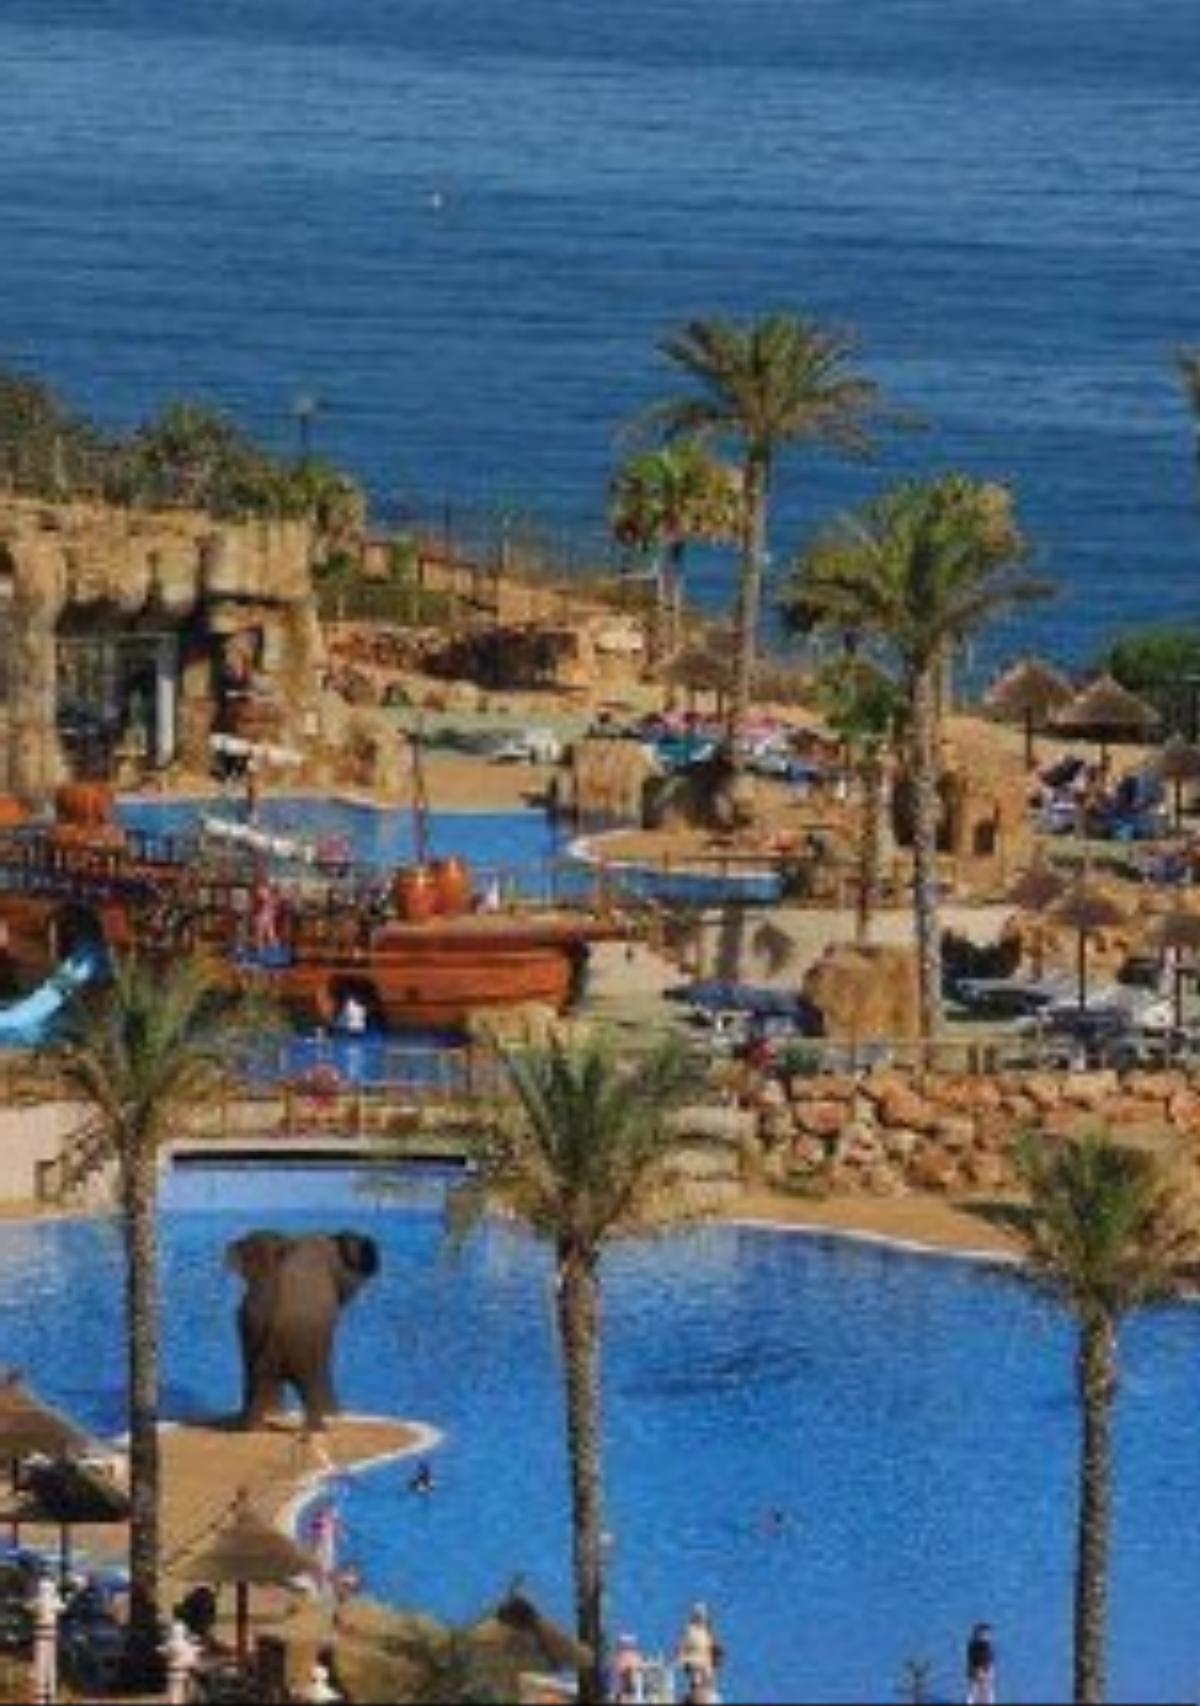 Holiday Villages Hotel Costa Del Sol Spain